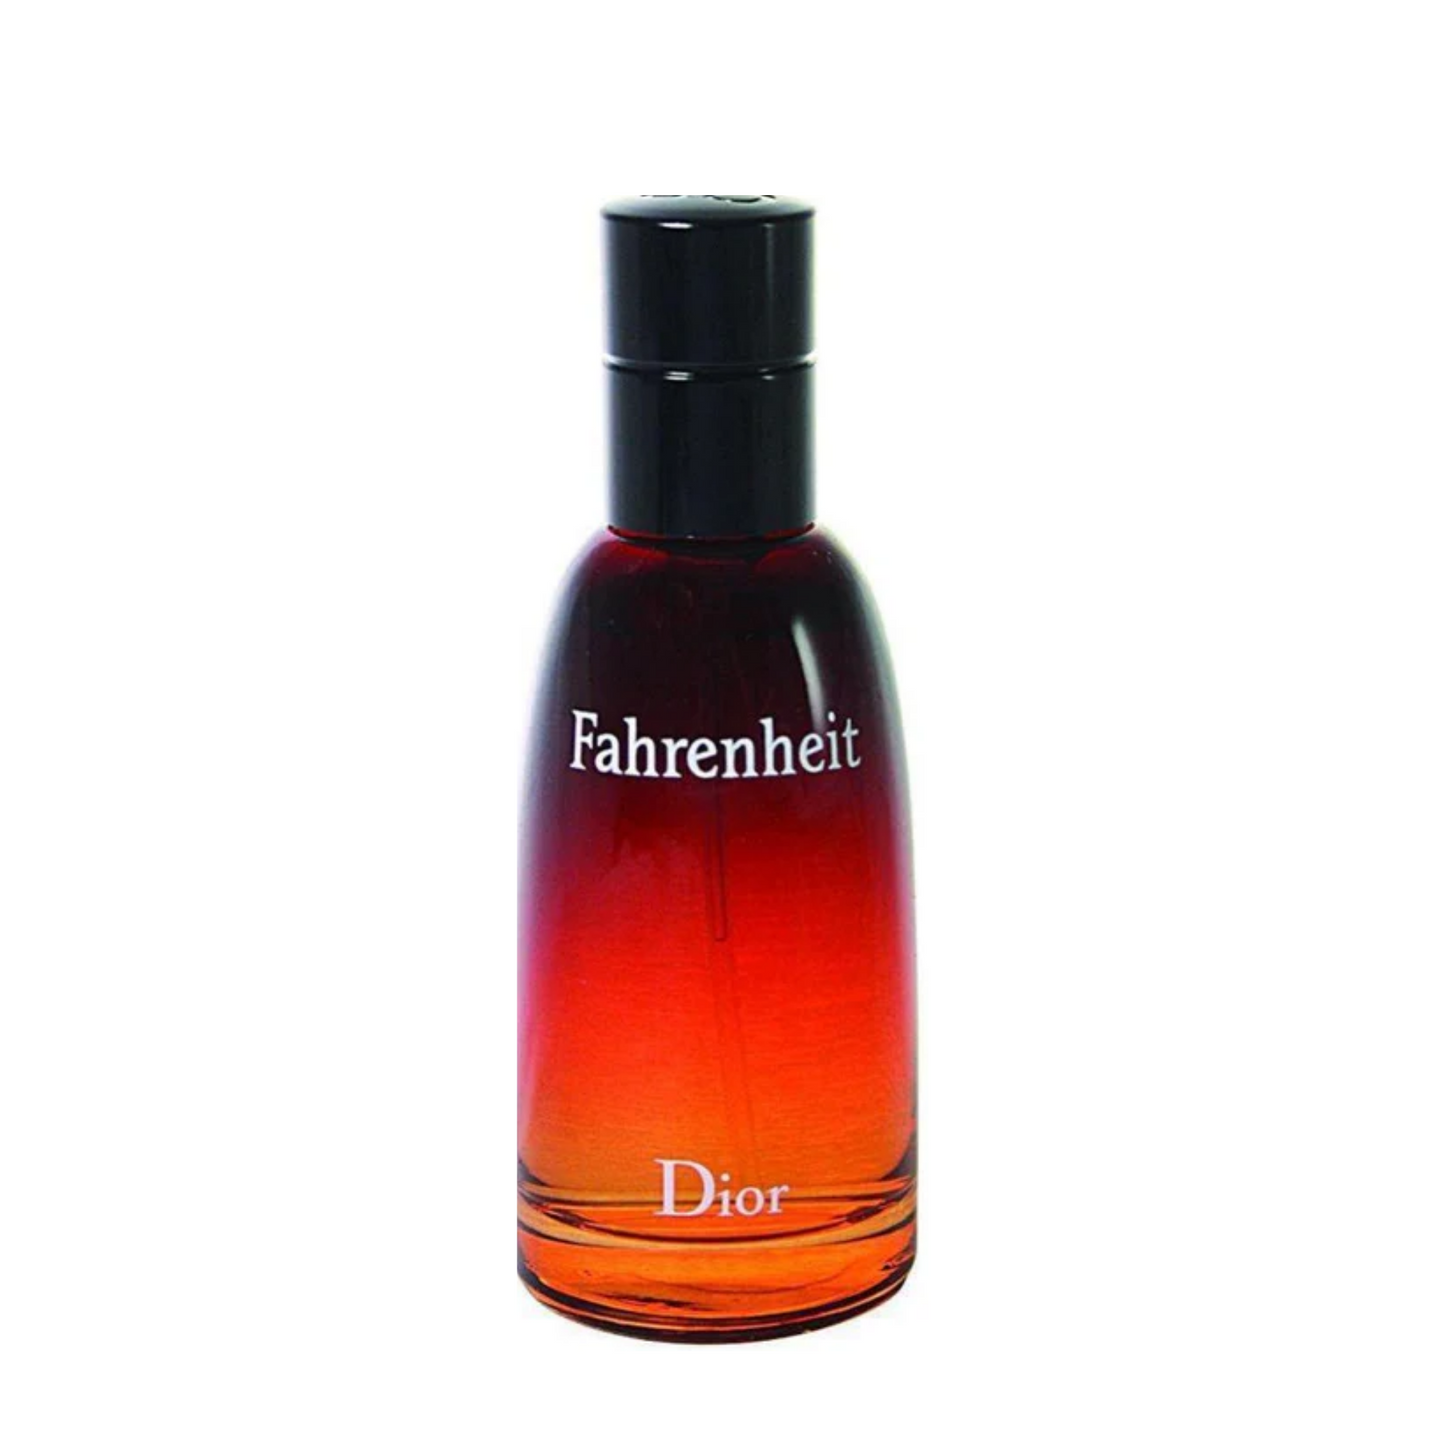 Christian Dior Fahrenheit type Perfume for Men